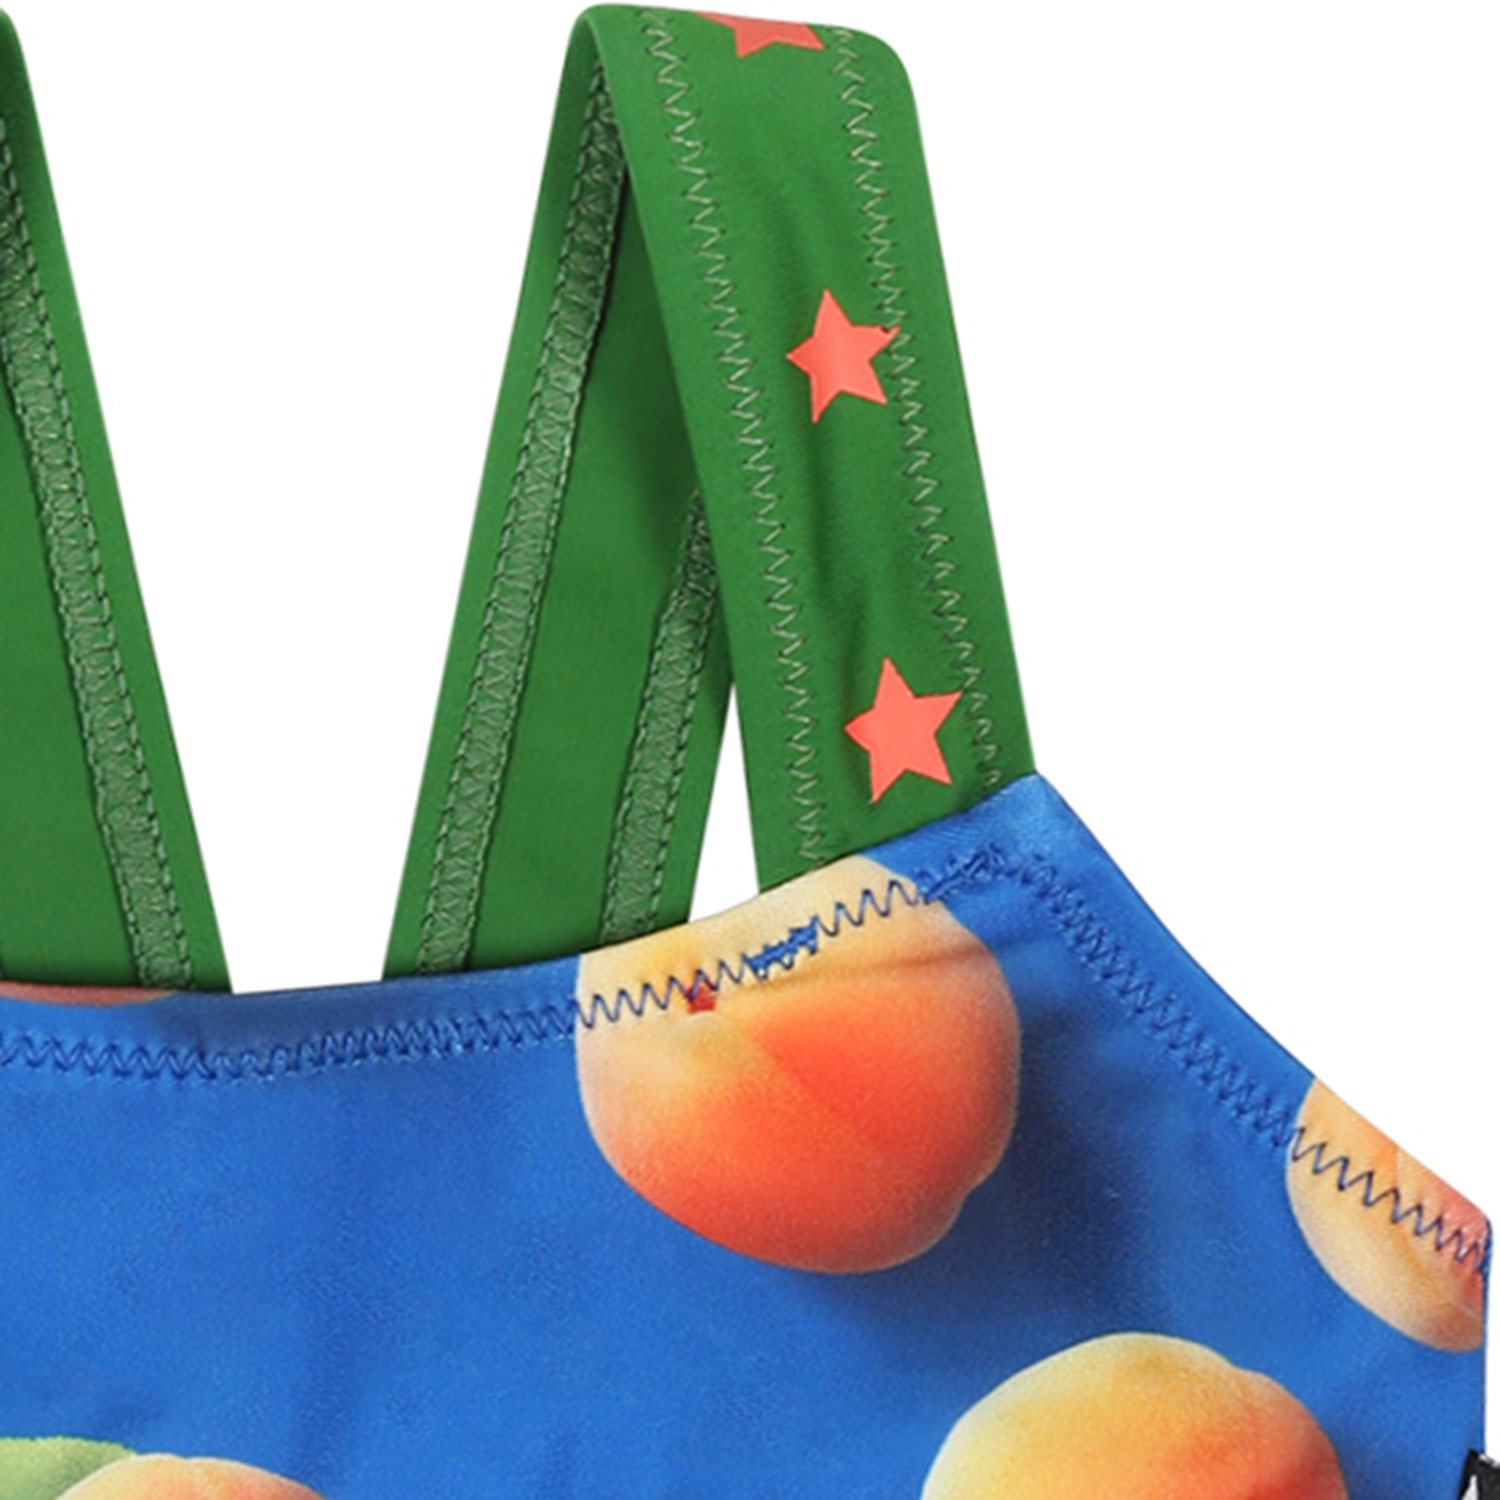 Shop Molo Blue Bikini For Baby Girl With Apricot Print